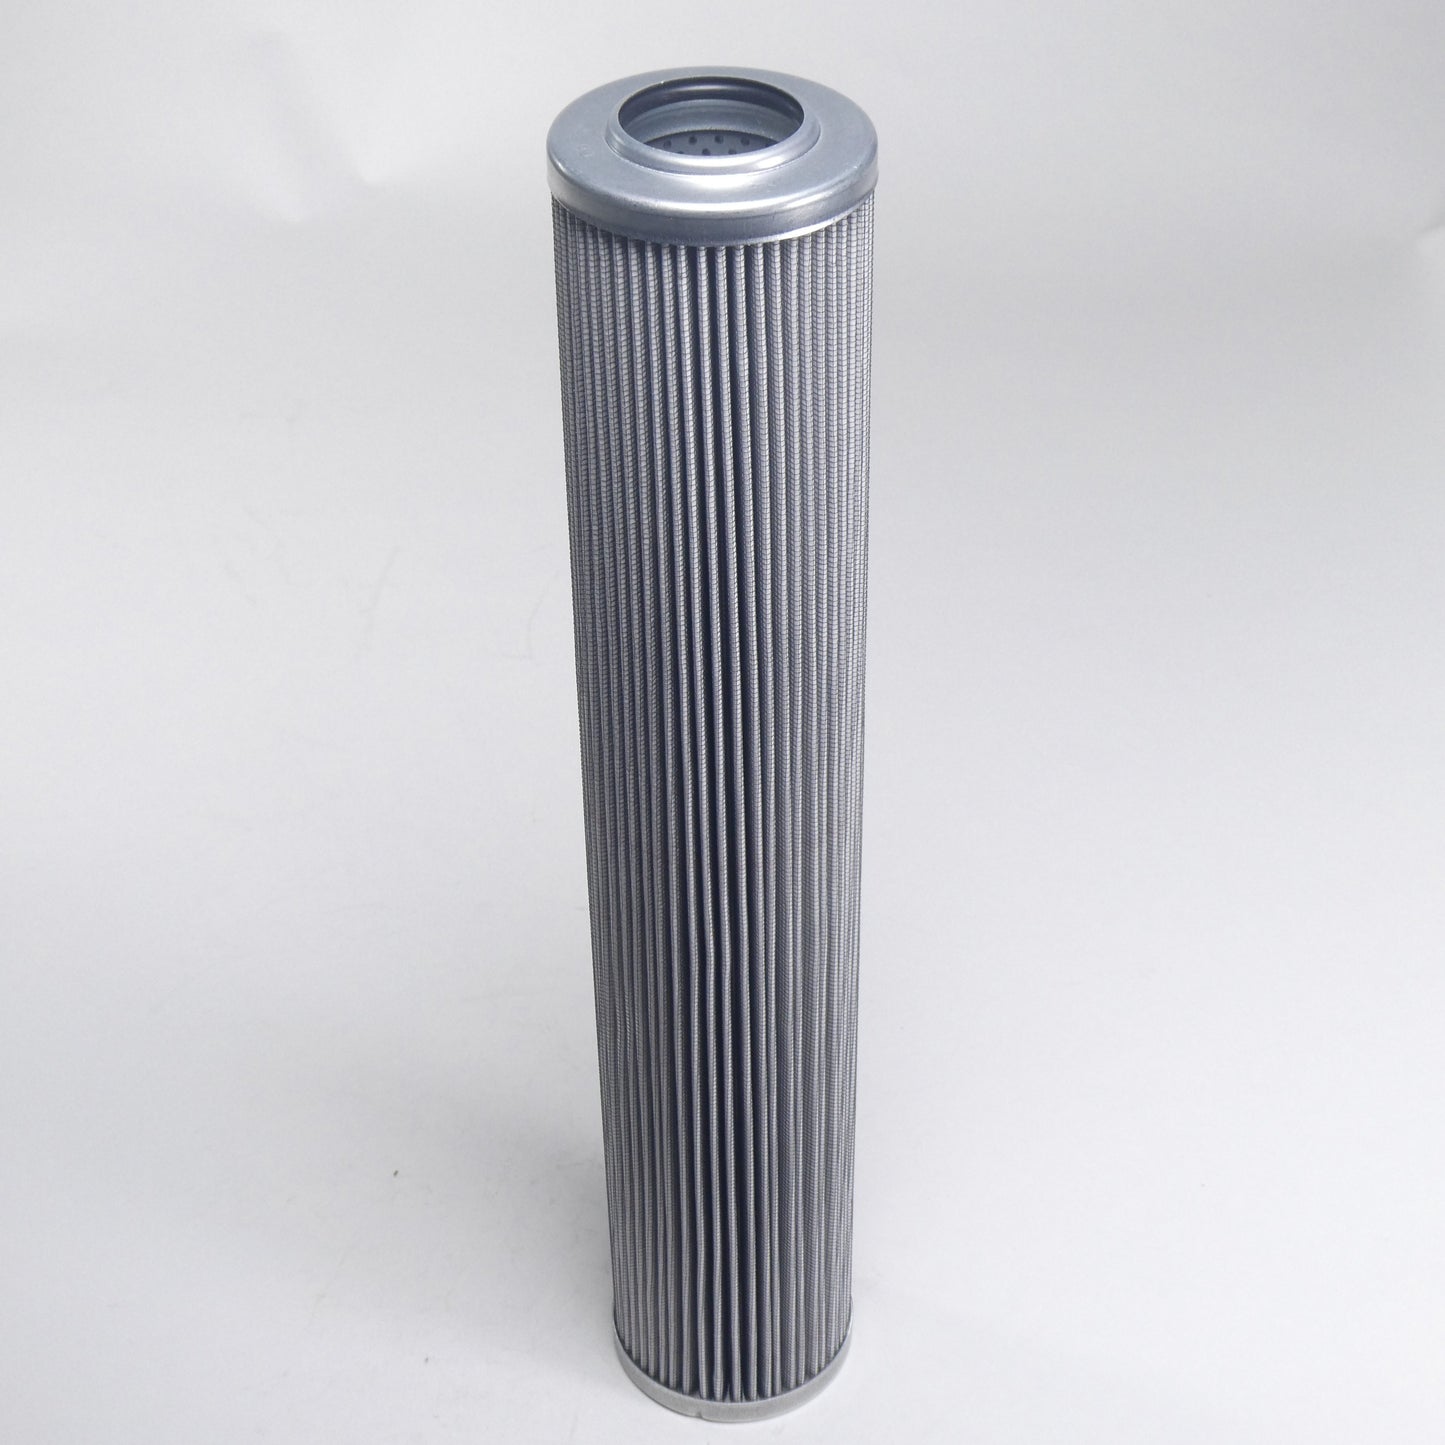 Hydrafil Replacement Filter Element for Donaldson DX2-9600-16-5UM-V